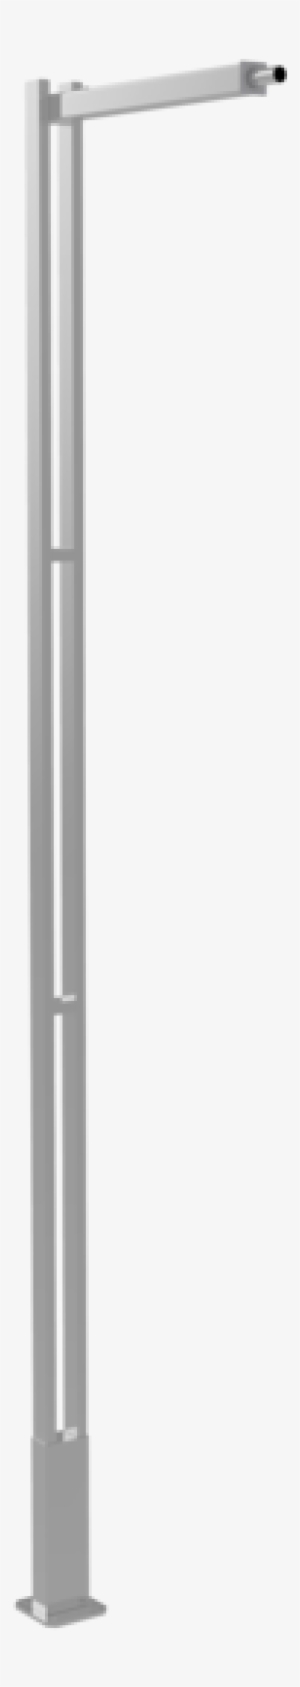 Decorative Tandem Style Aluminum Pole - Quality Infrastructure